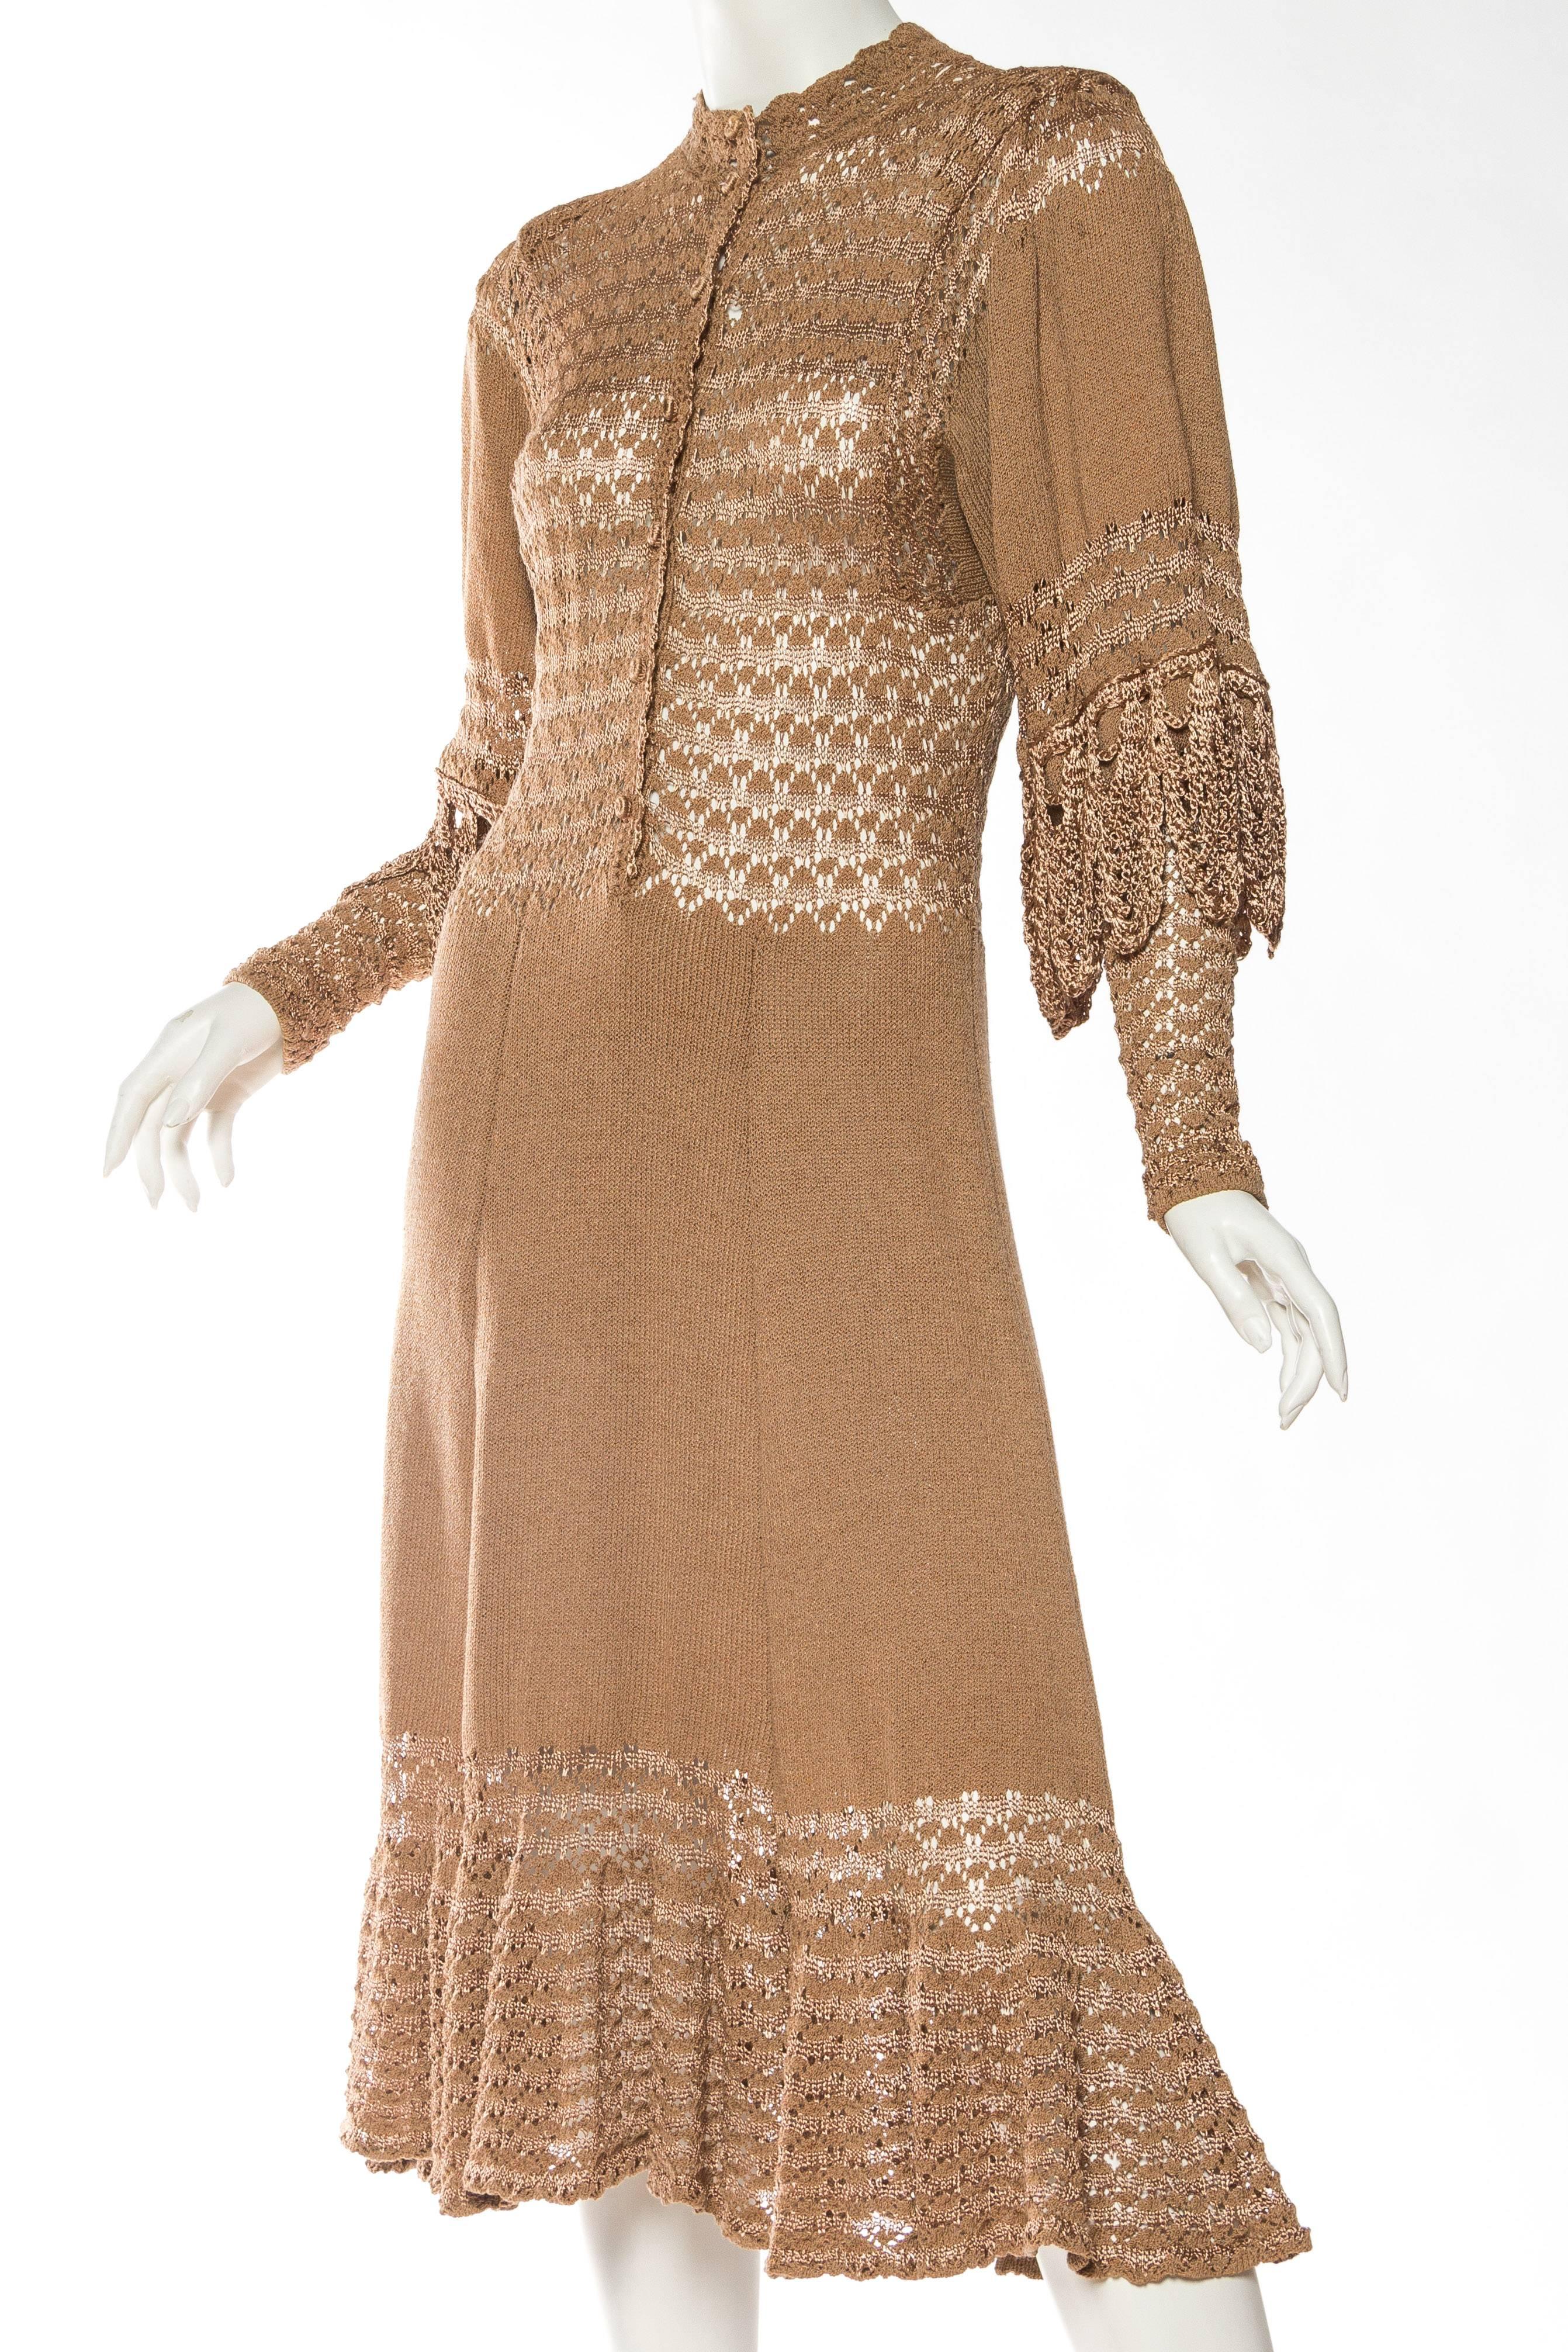 1970s Victorian Revival Knit Dress 1